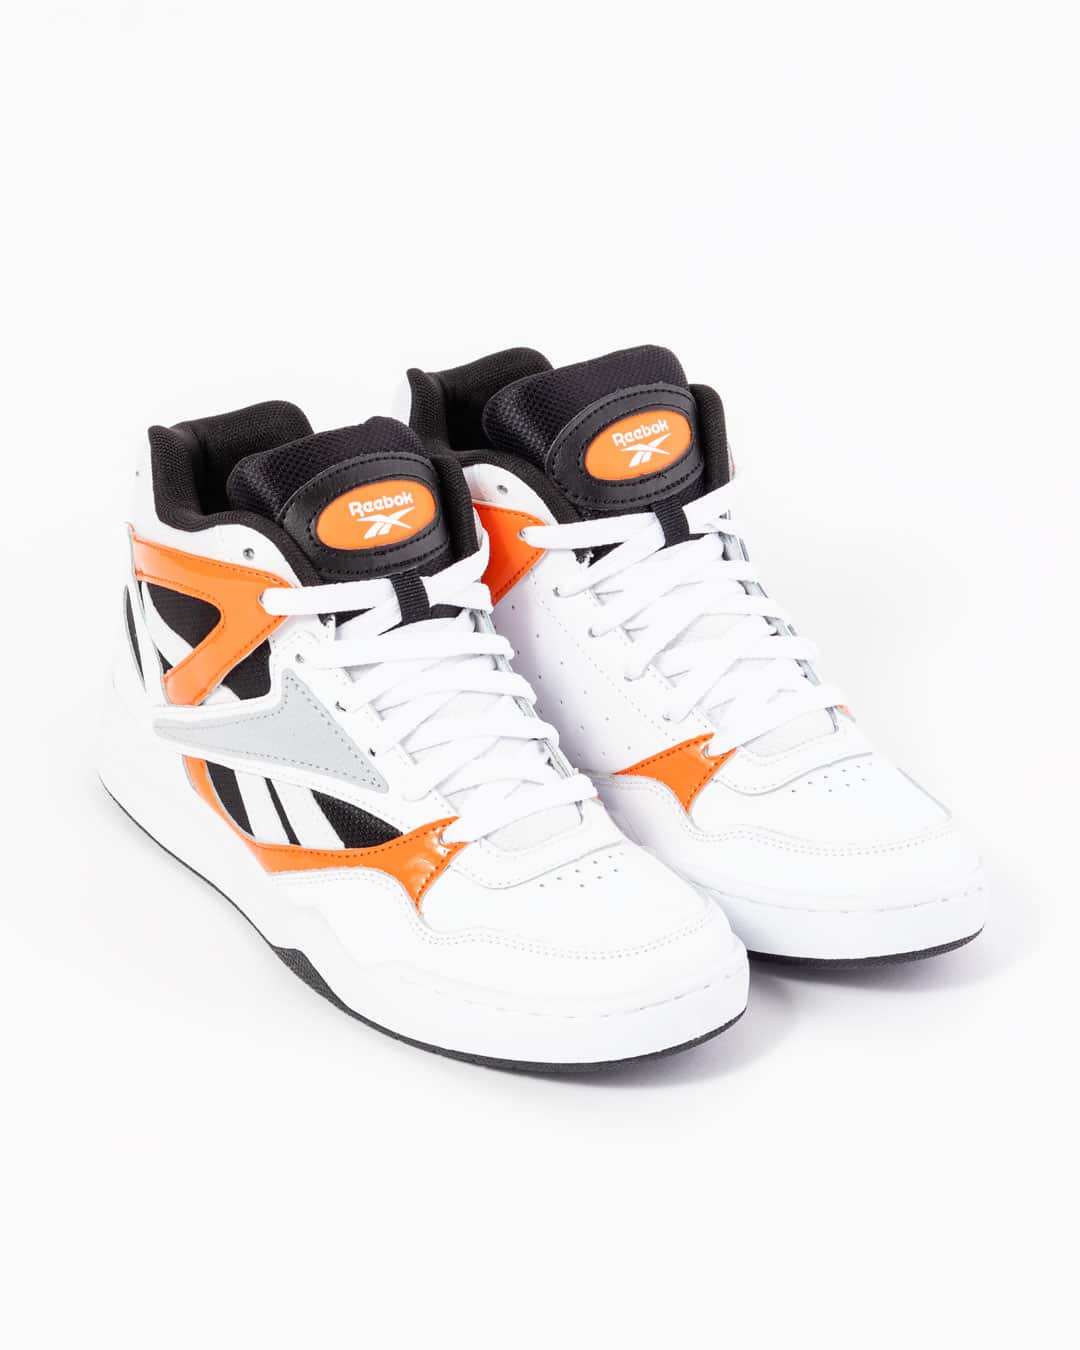 Reebok mens hi top sneakers white & orange side profile